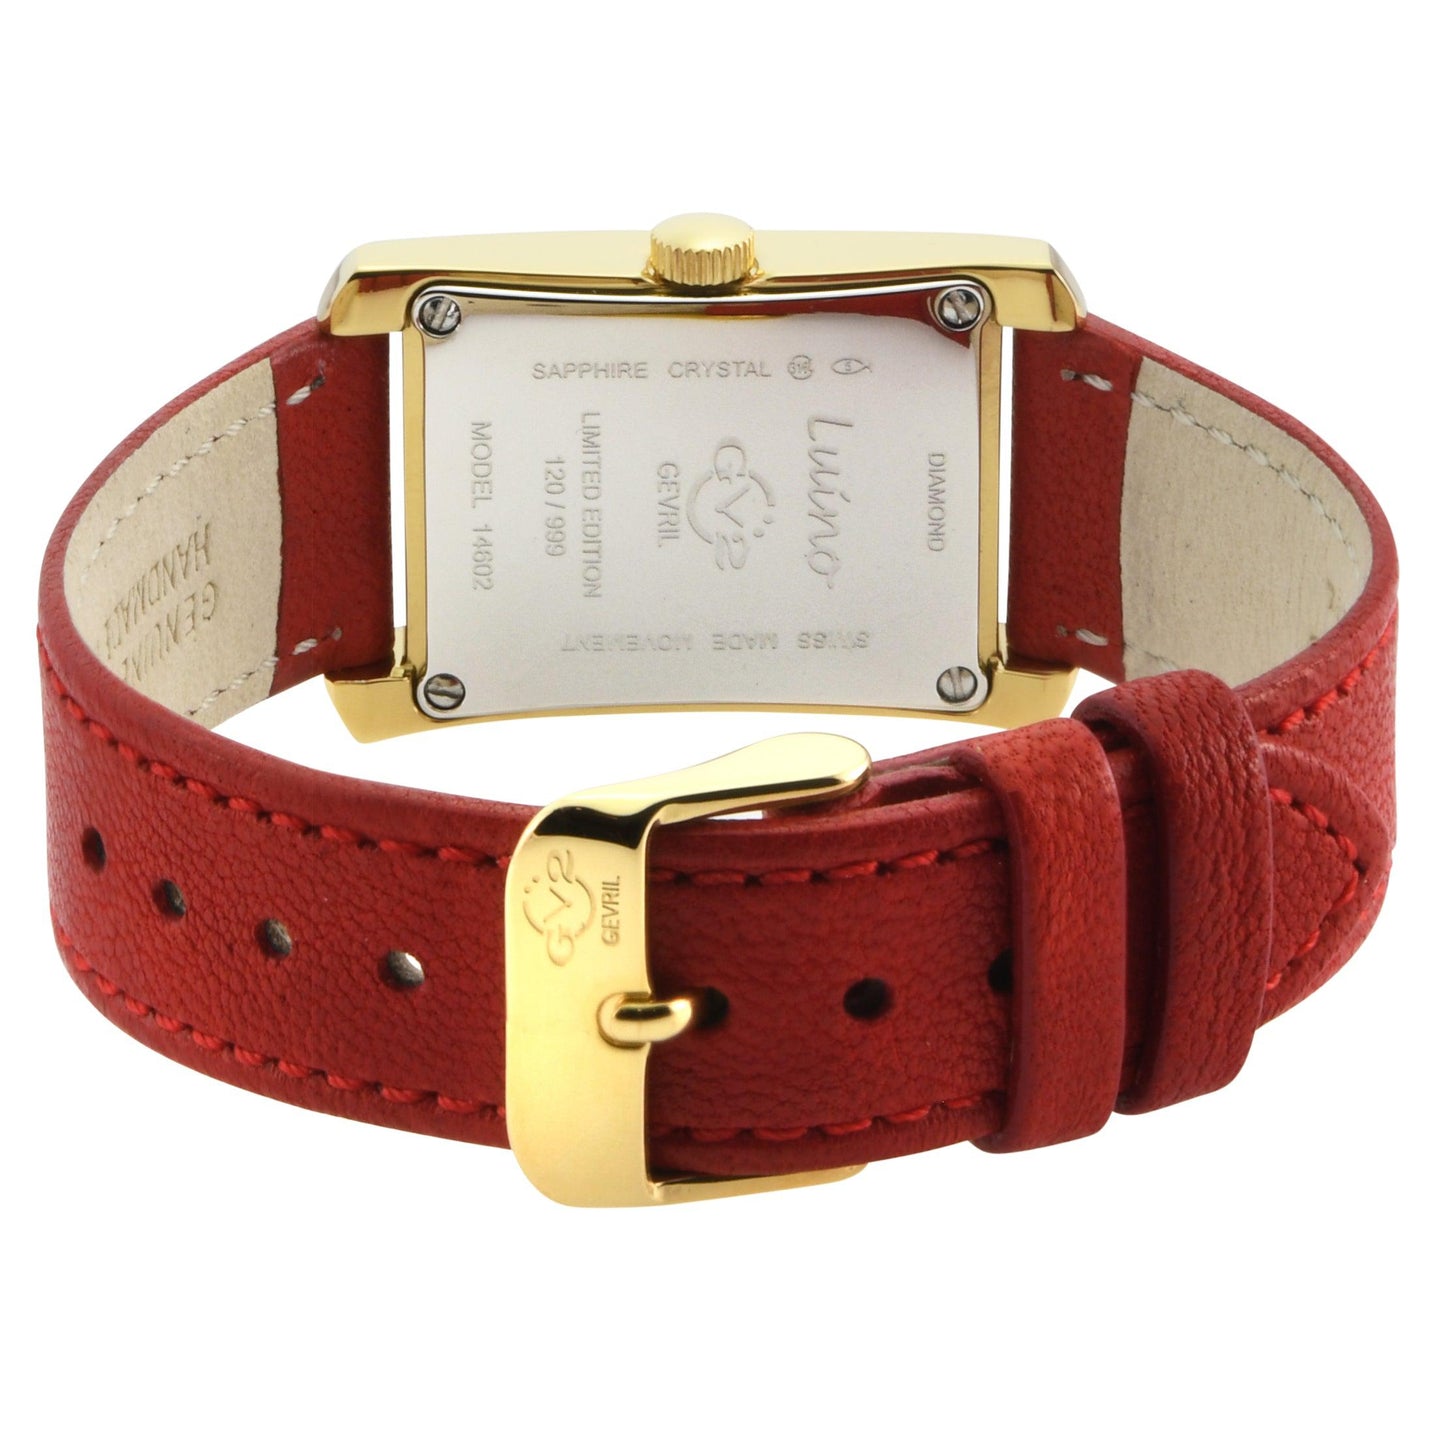 Gevril-Luxury-Swiss-Watches-GV2 Luino-14602